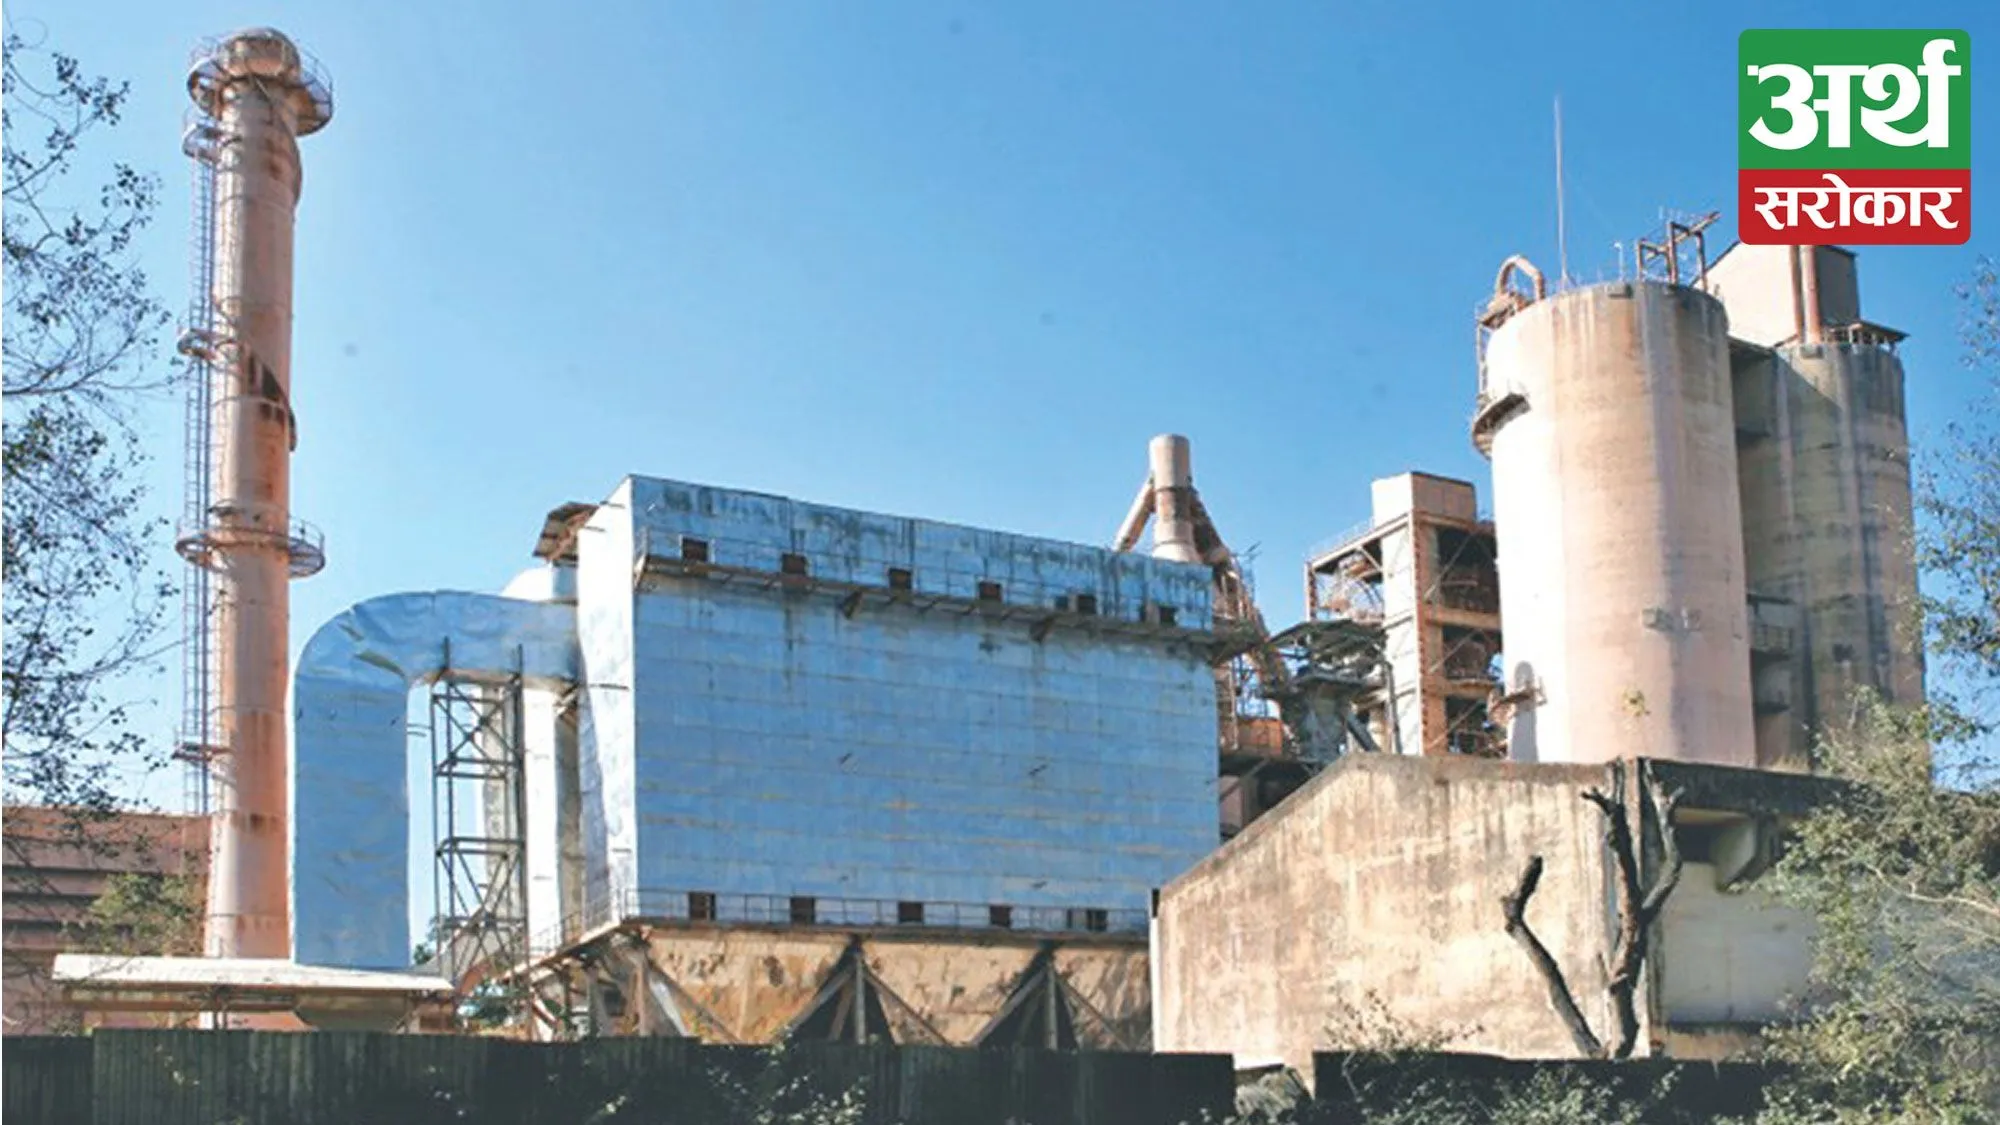 Hetauda Cement Industry Resumes Production After Equipment Upgrades